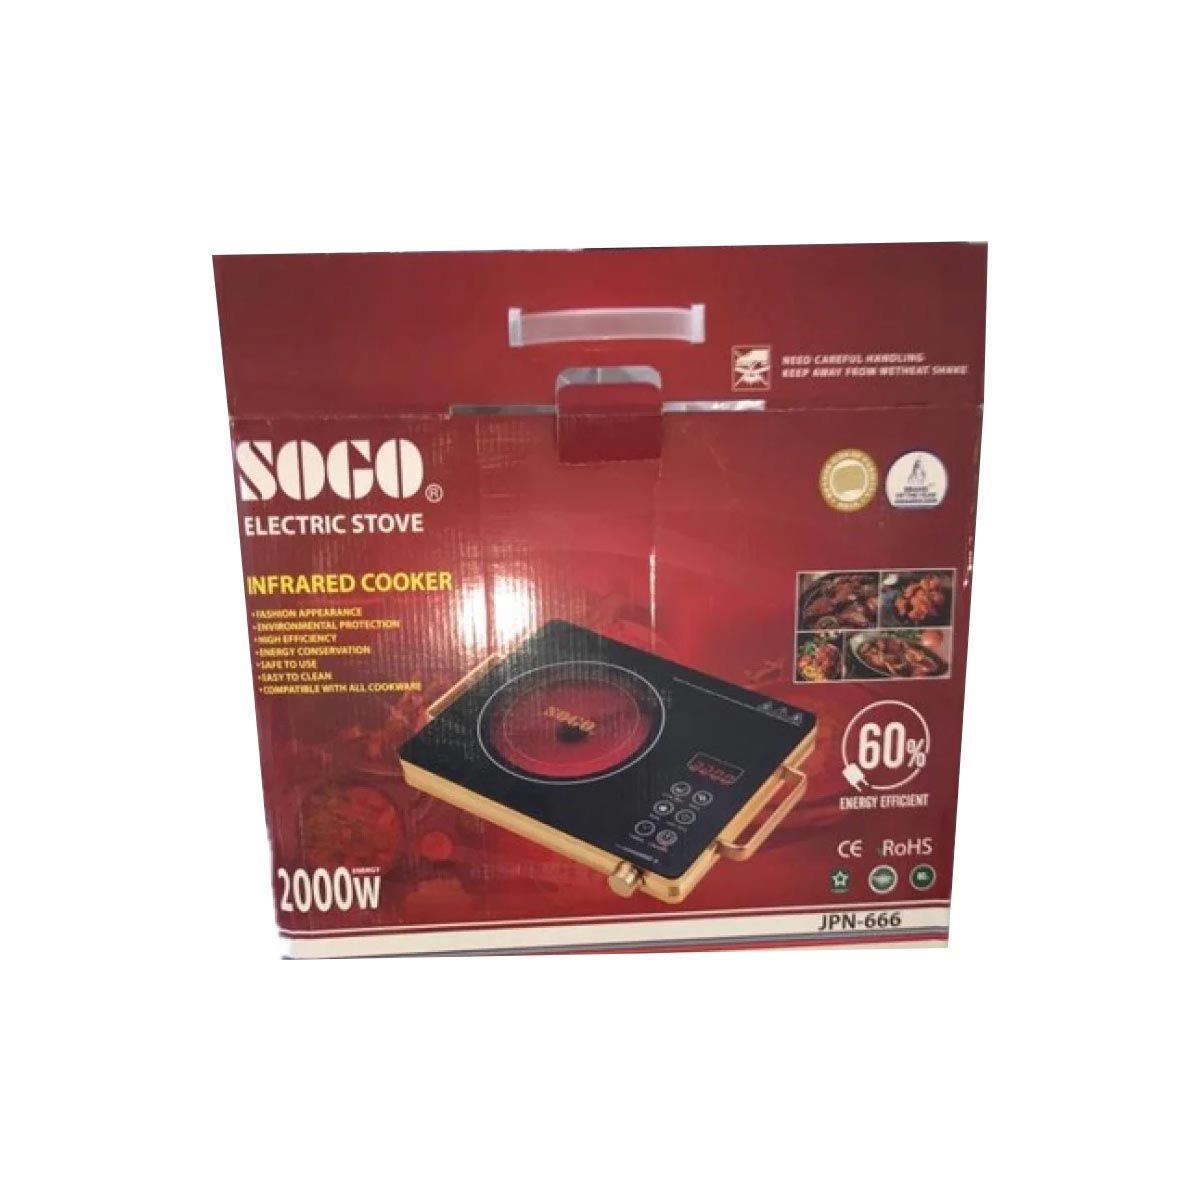 SOGO JPN-666 Infrared Cooker

- No Warranty